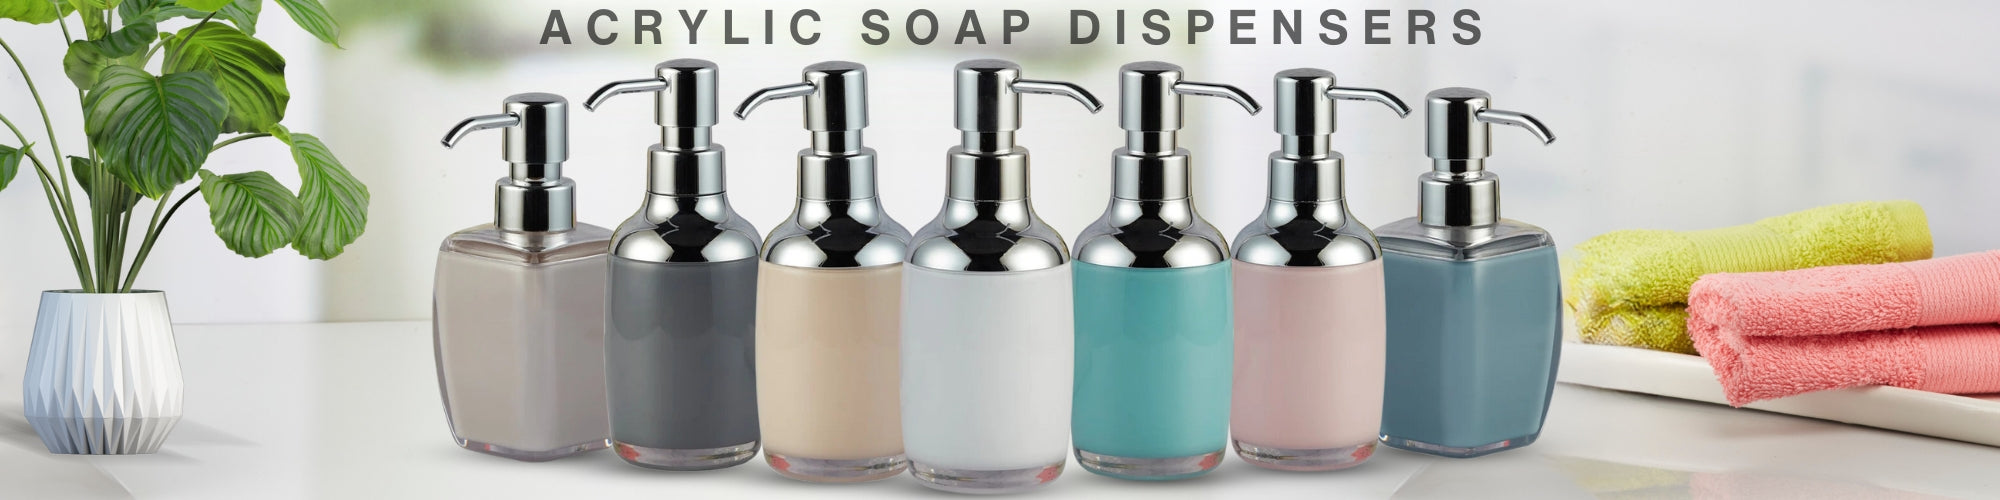 Acrylic Soap Dispensers